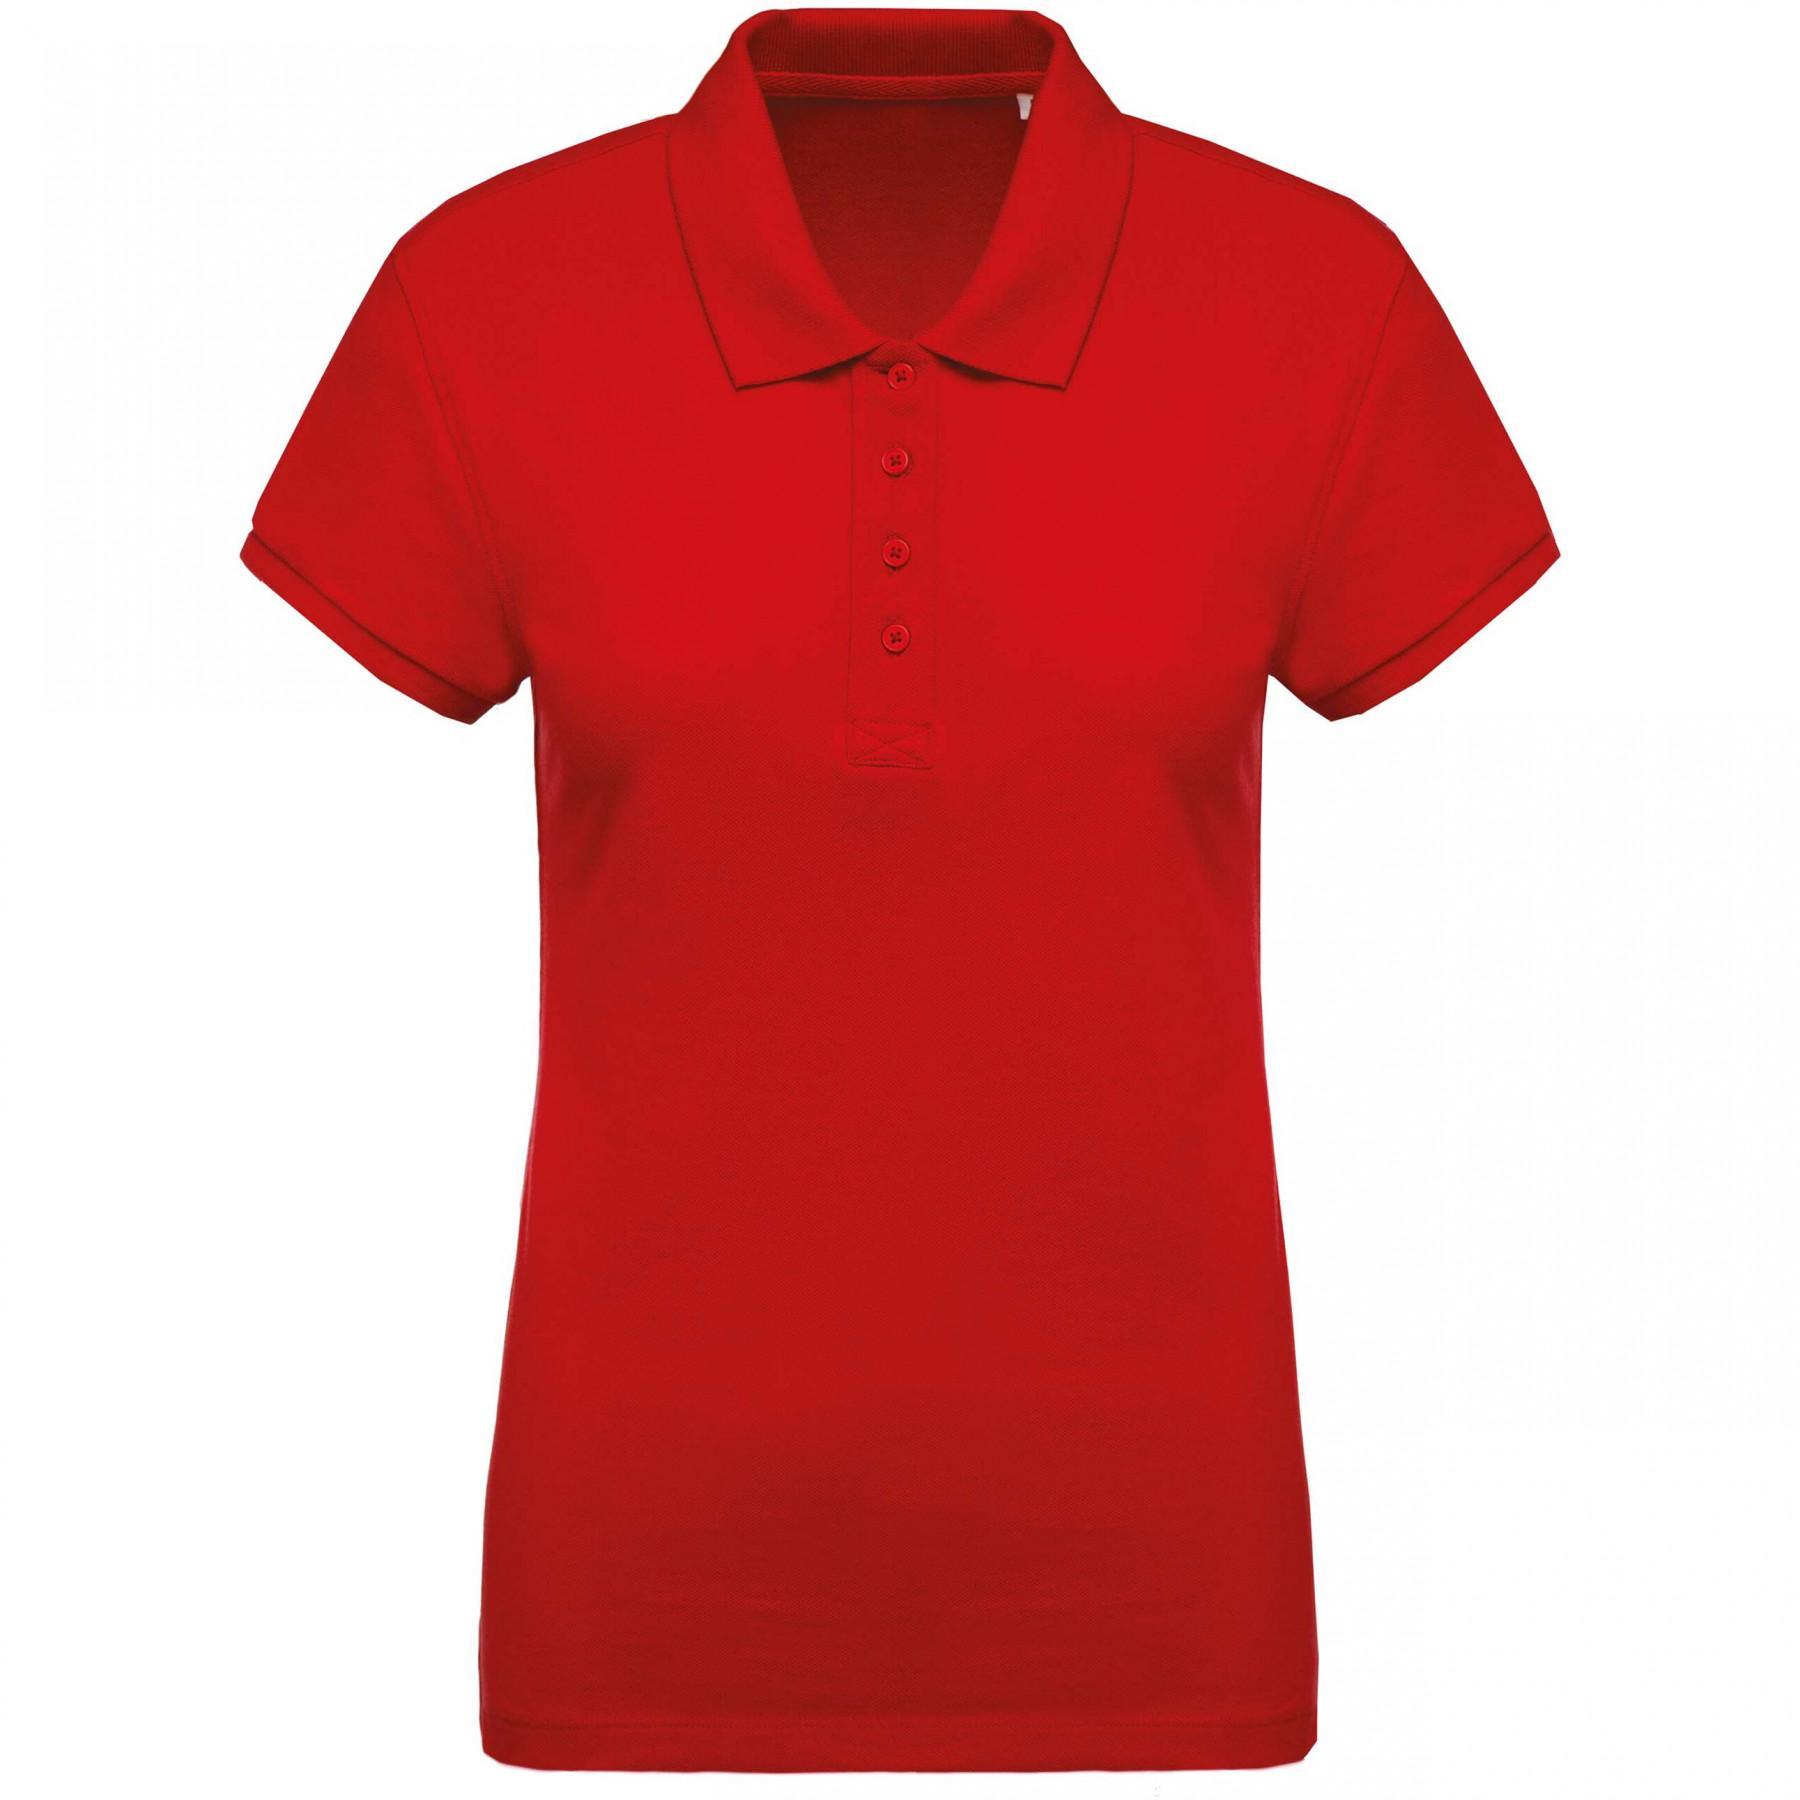 Damen-Poloshirt mit kurzen Ärmeln Kariban coton